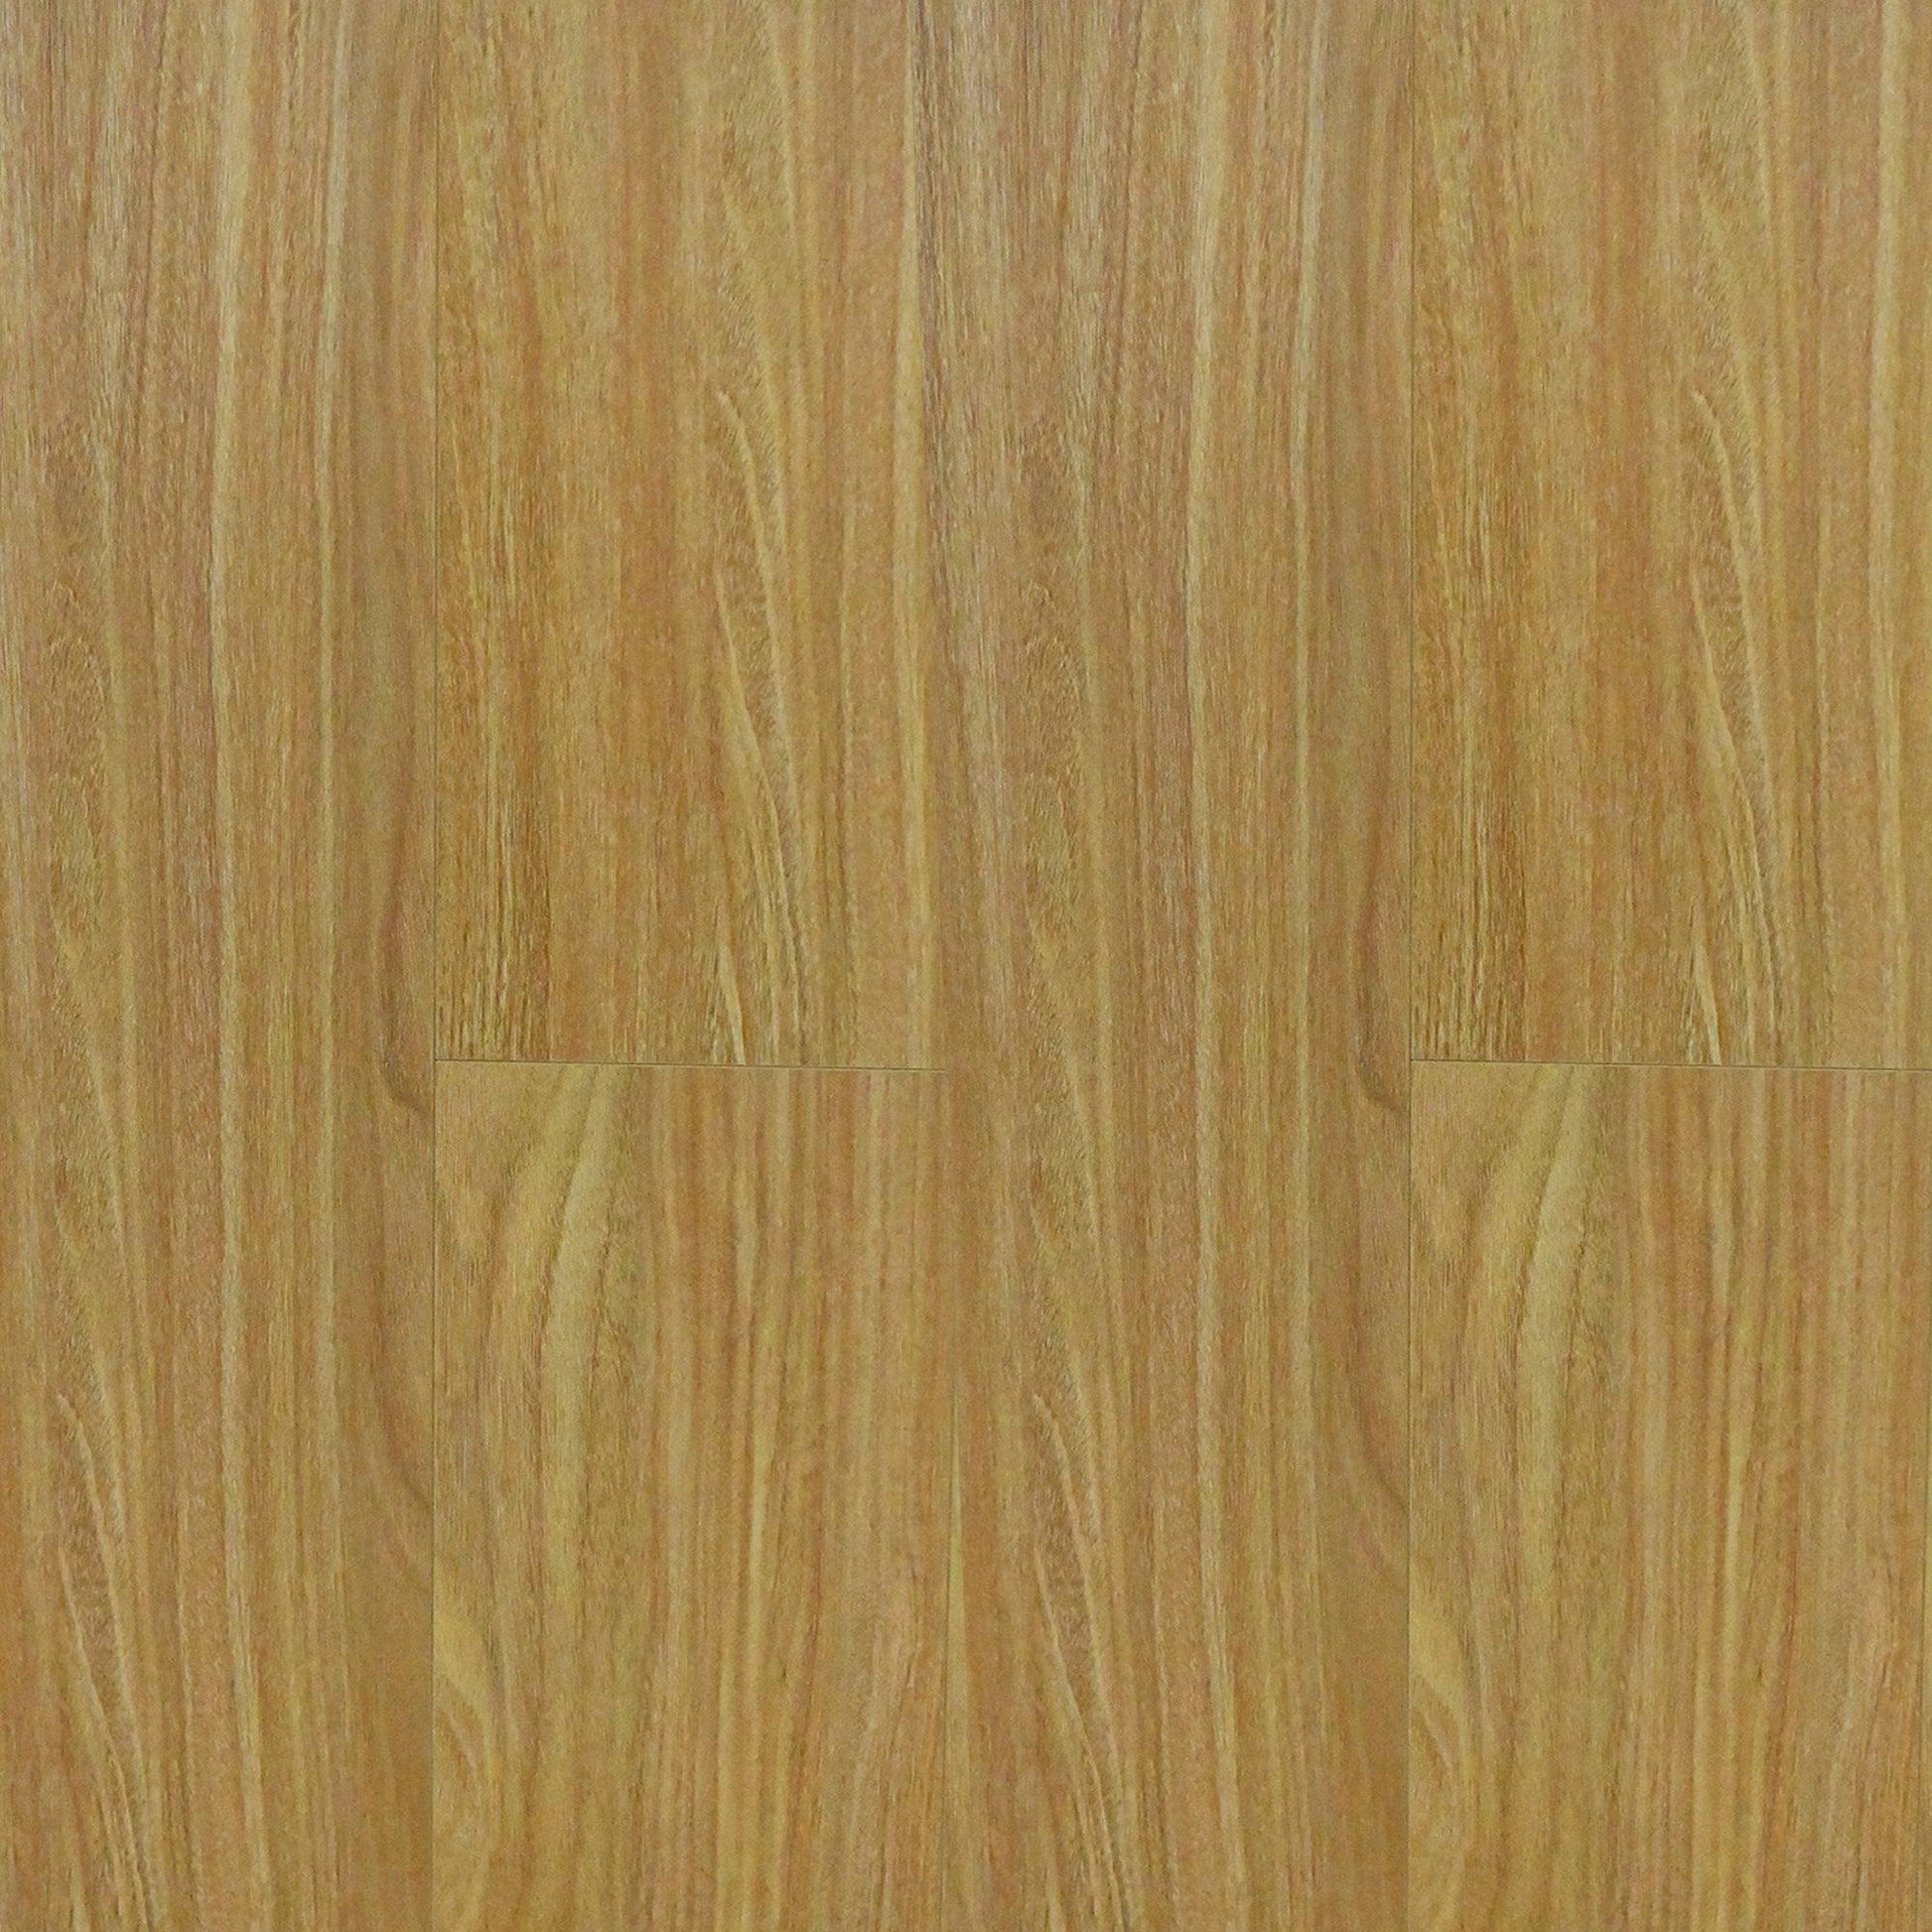 Birch Laminate Flooring by KLD Home